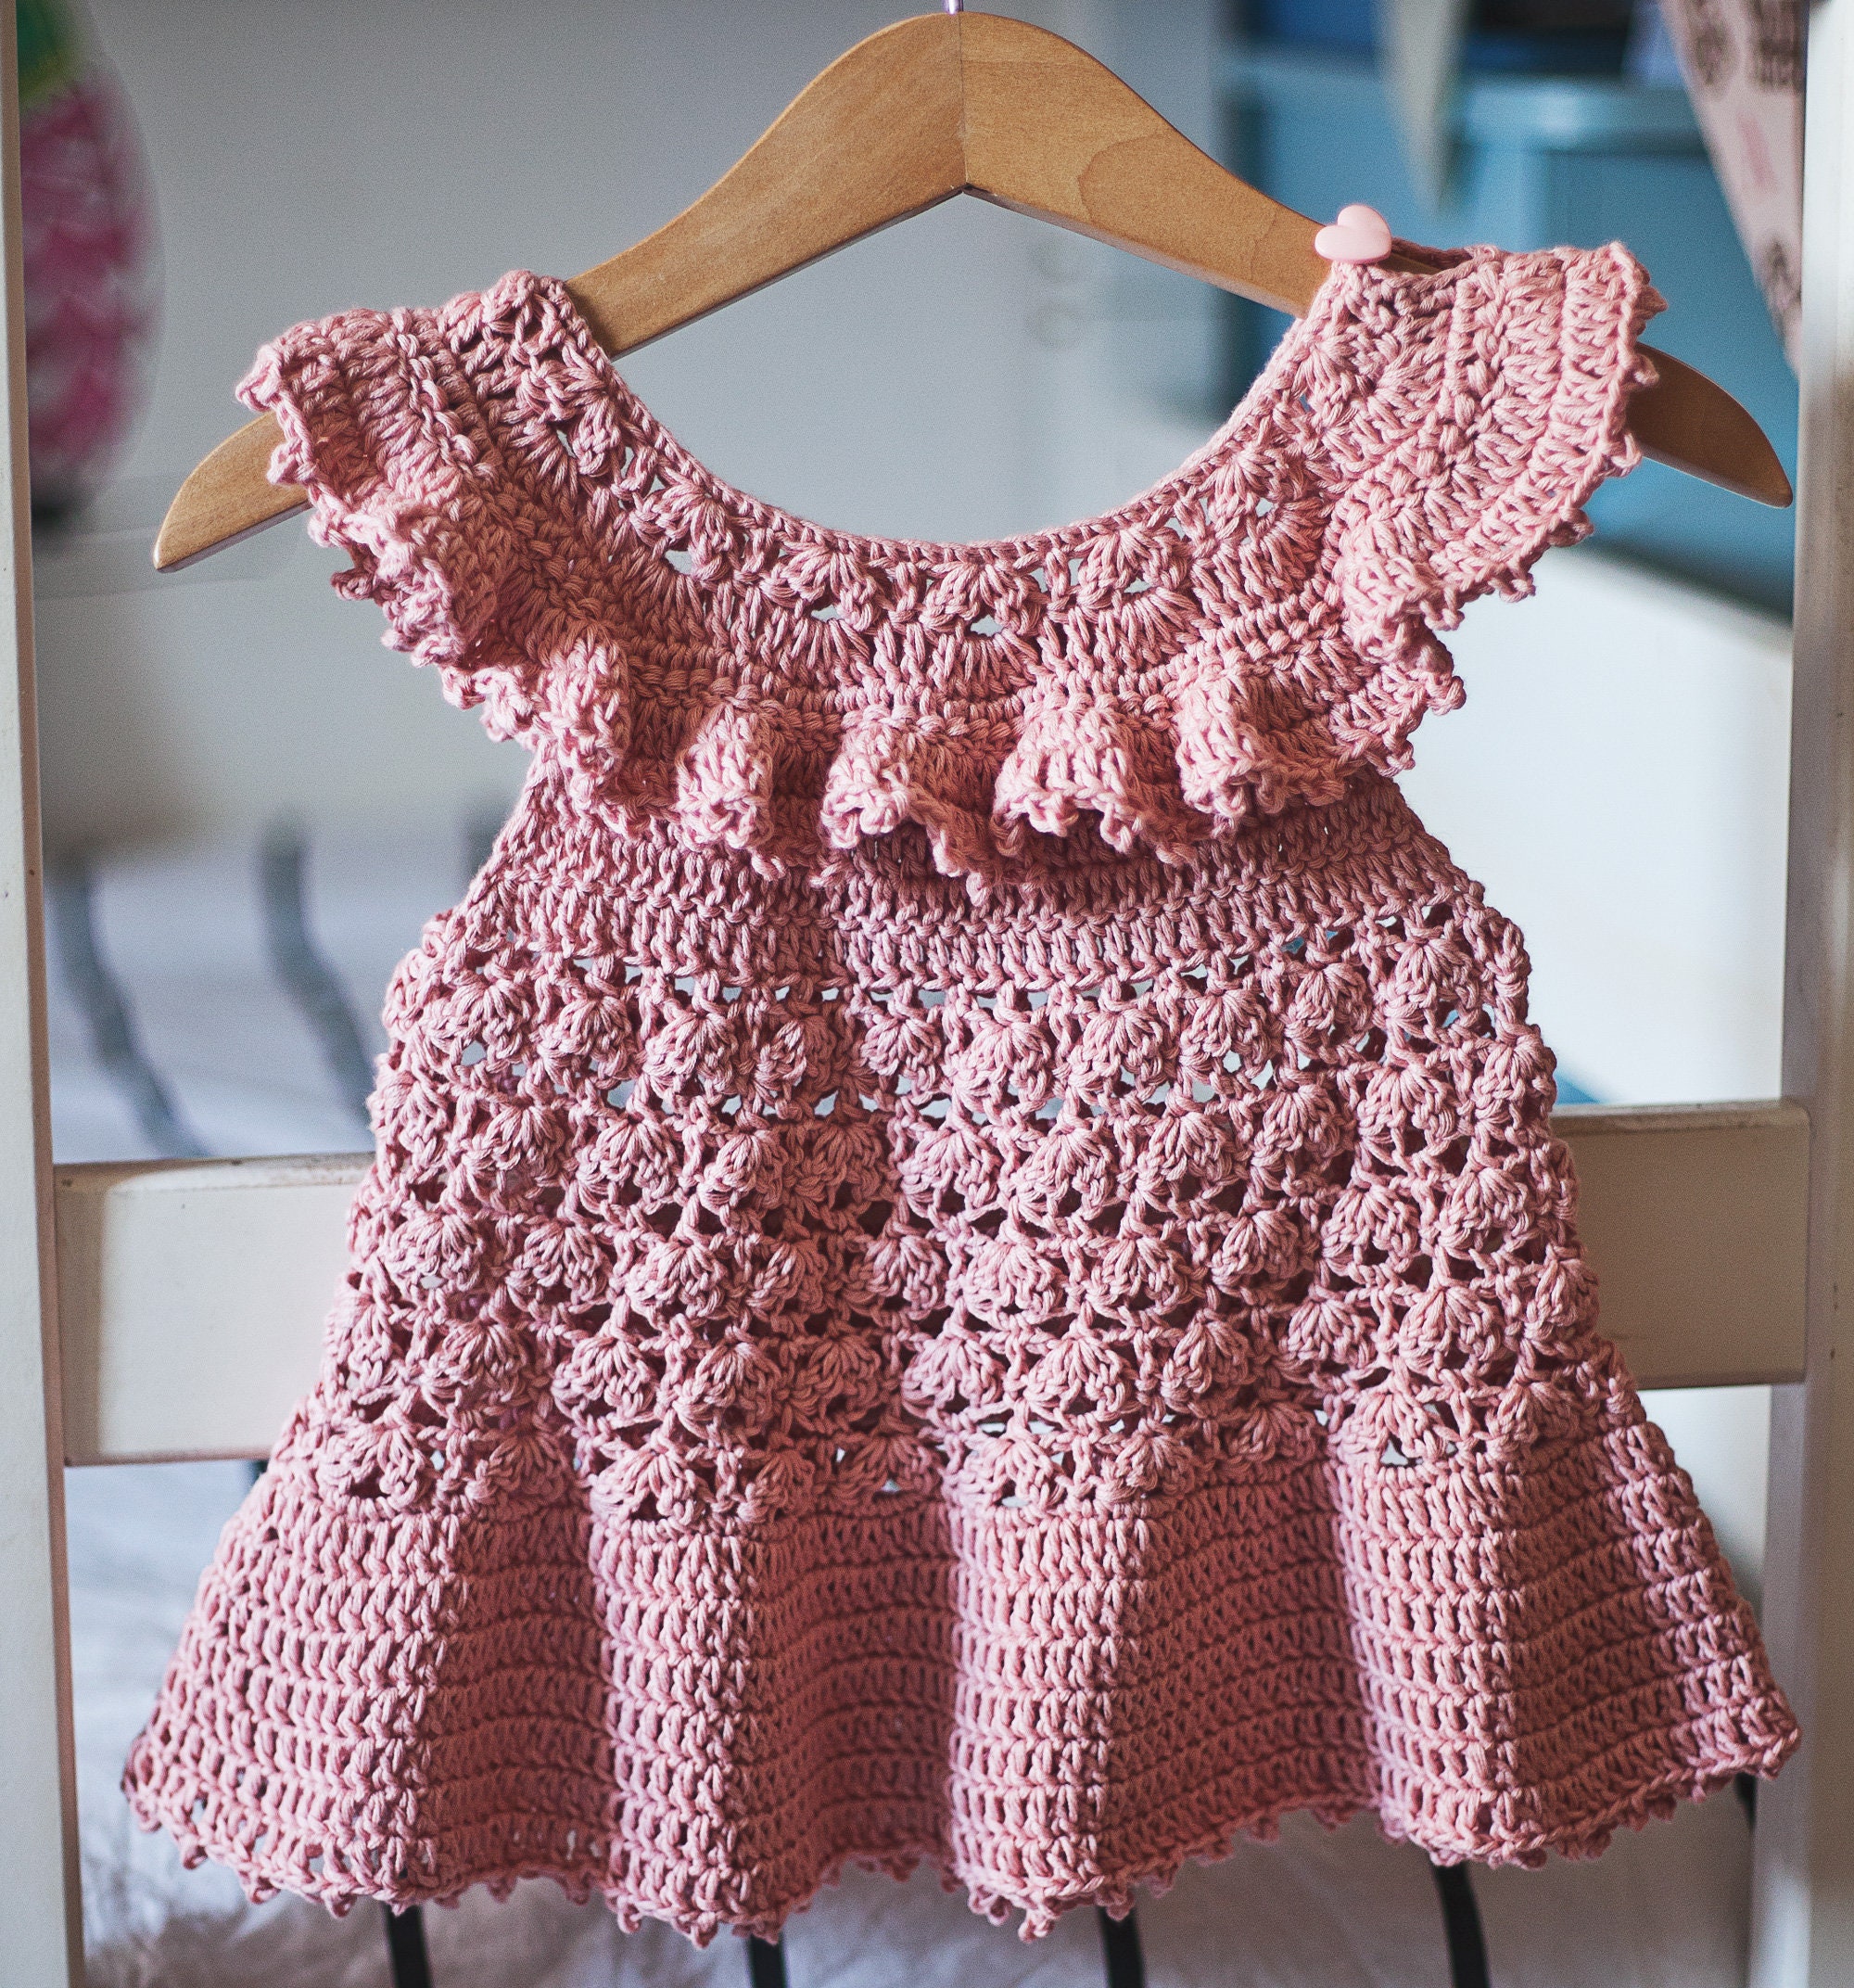 Crochet dress PATTERN Sweet Pea Dress sizes from 6-12m up | Etsy